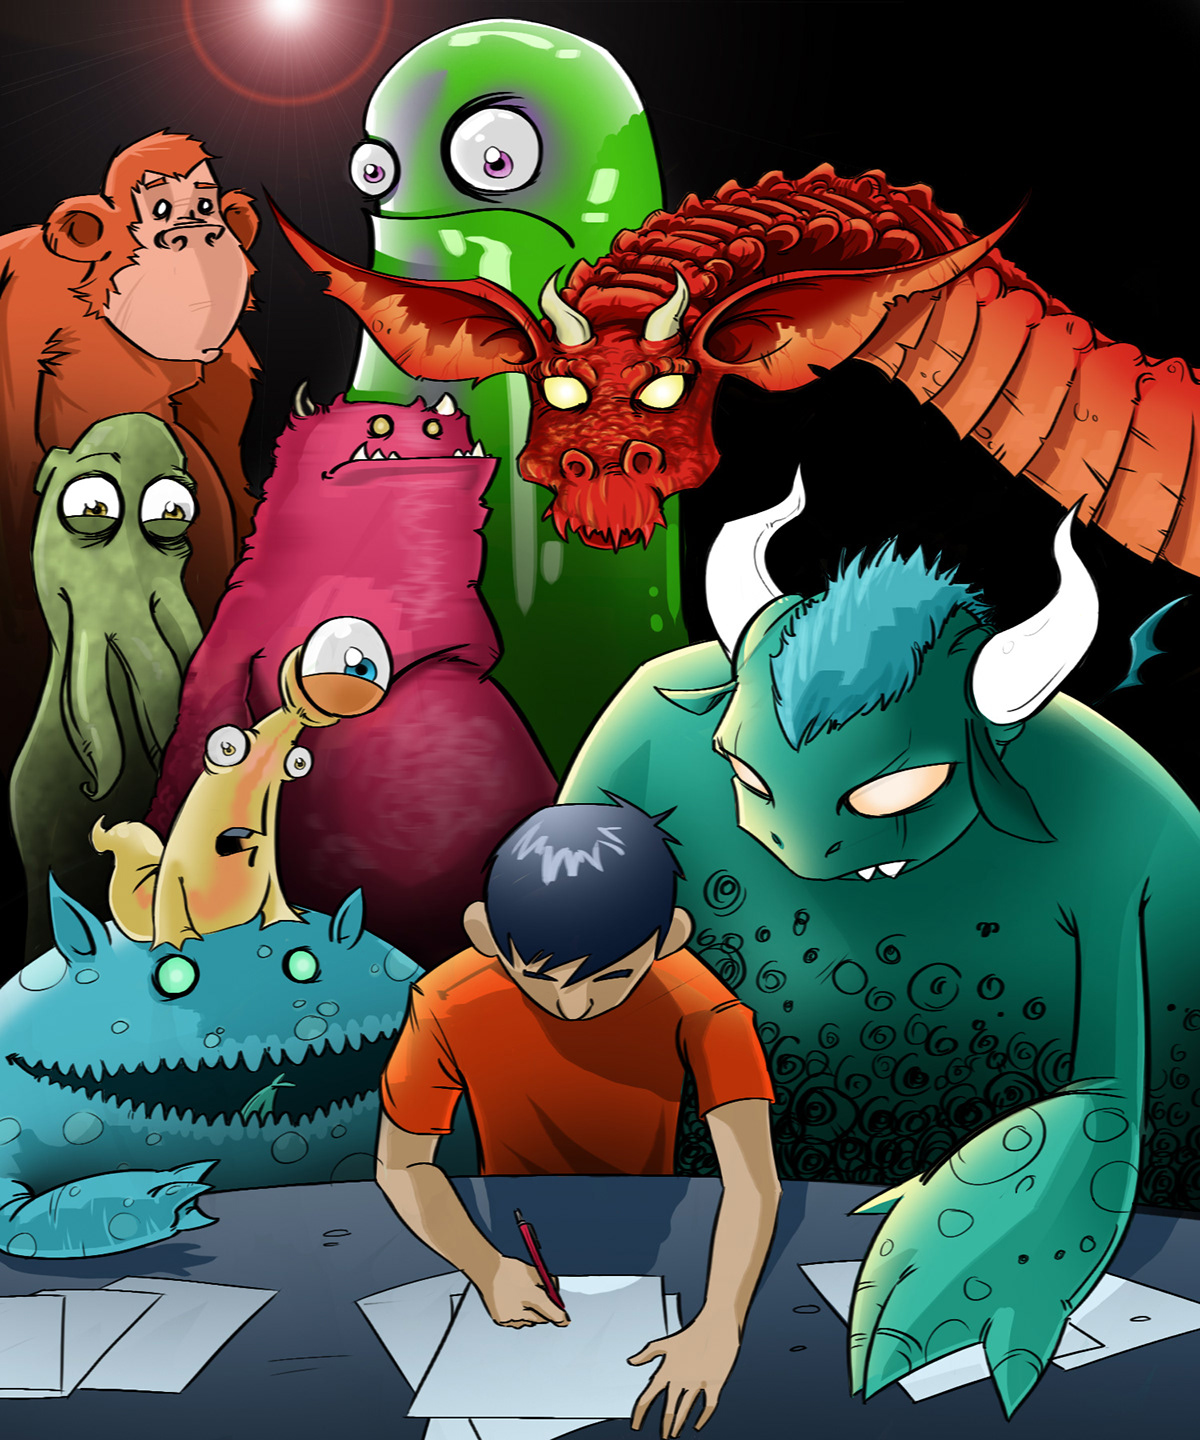 art comics cartoon monster hugebeard kraken Character concept